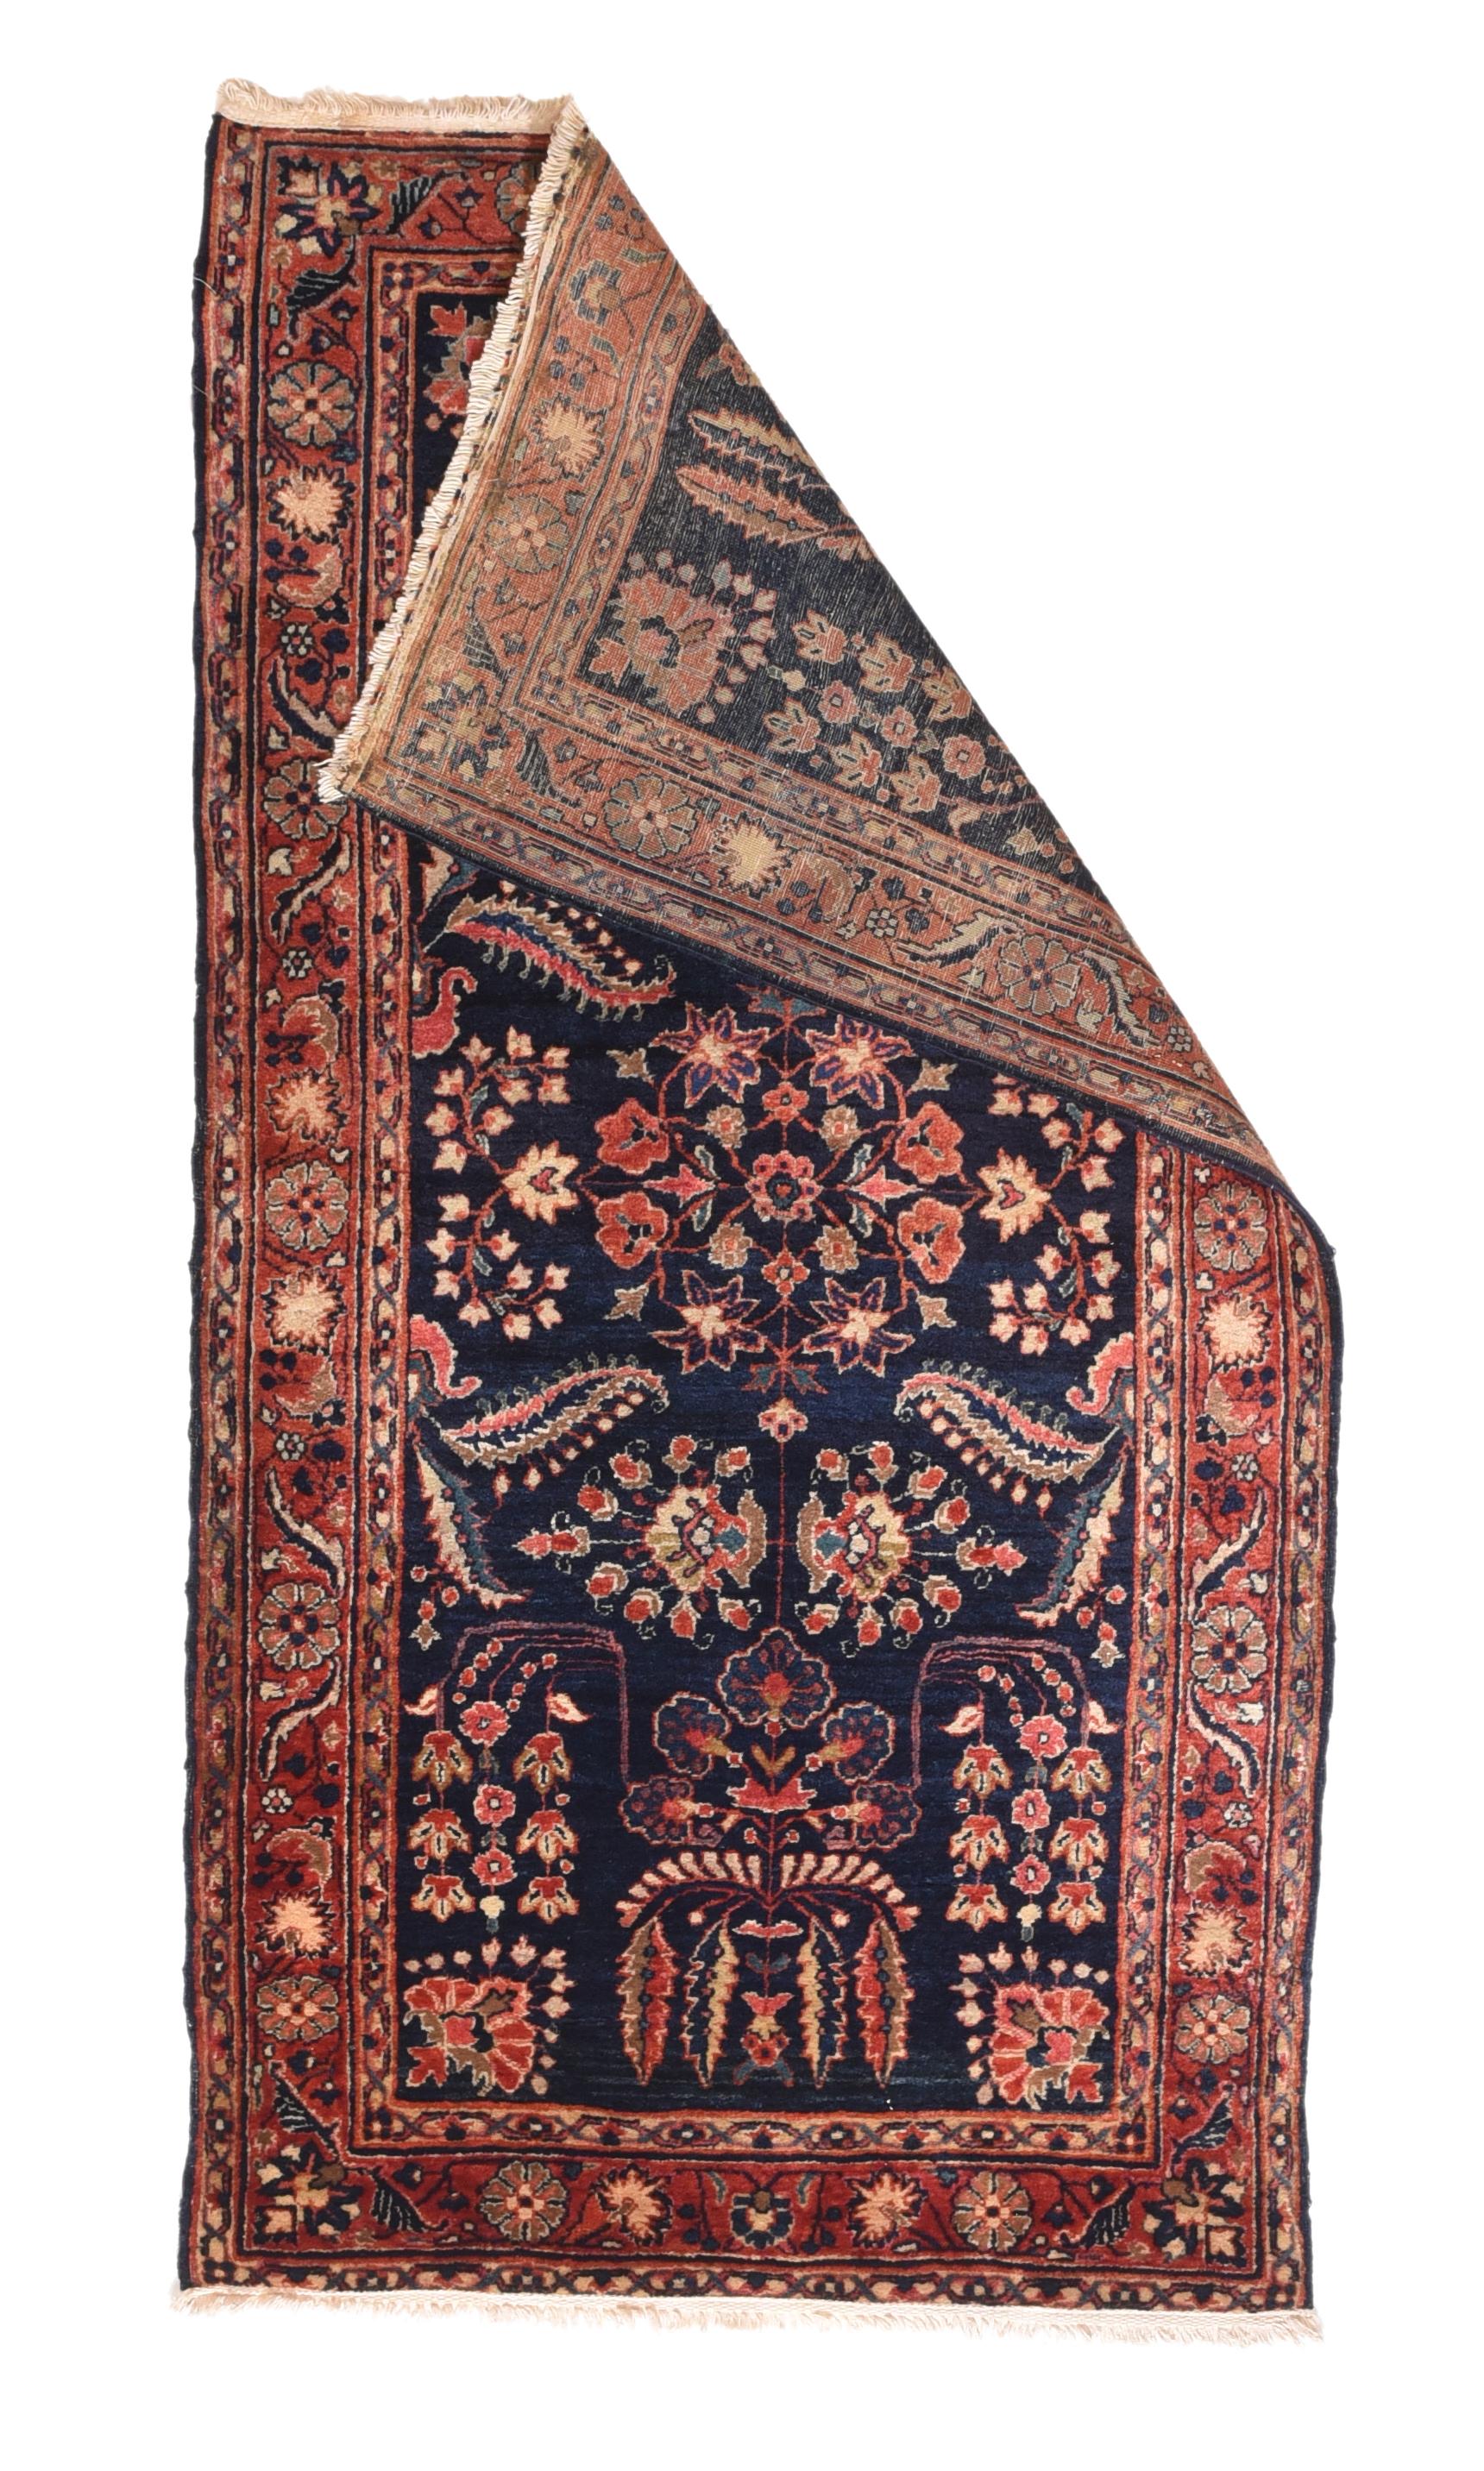 Antique Mohajeran Sarouk rug measures: 2'9'' x 5'2''.